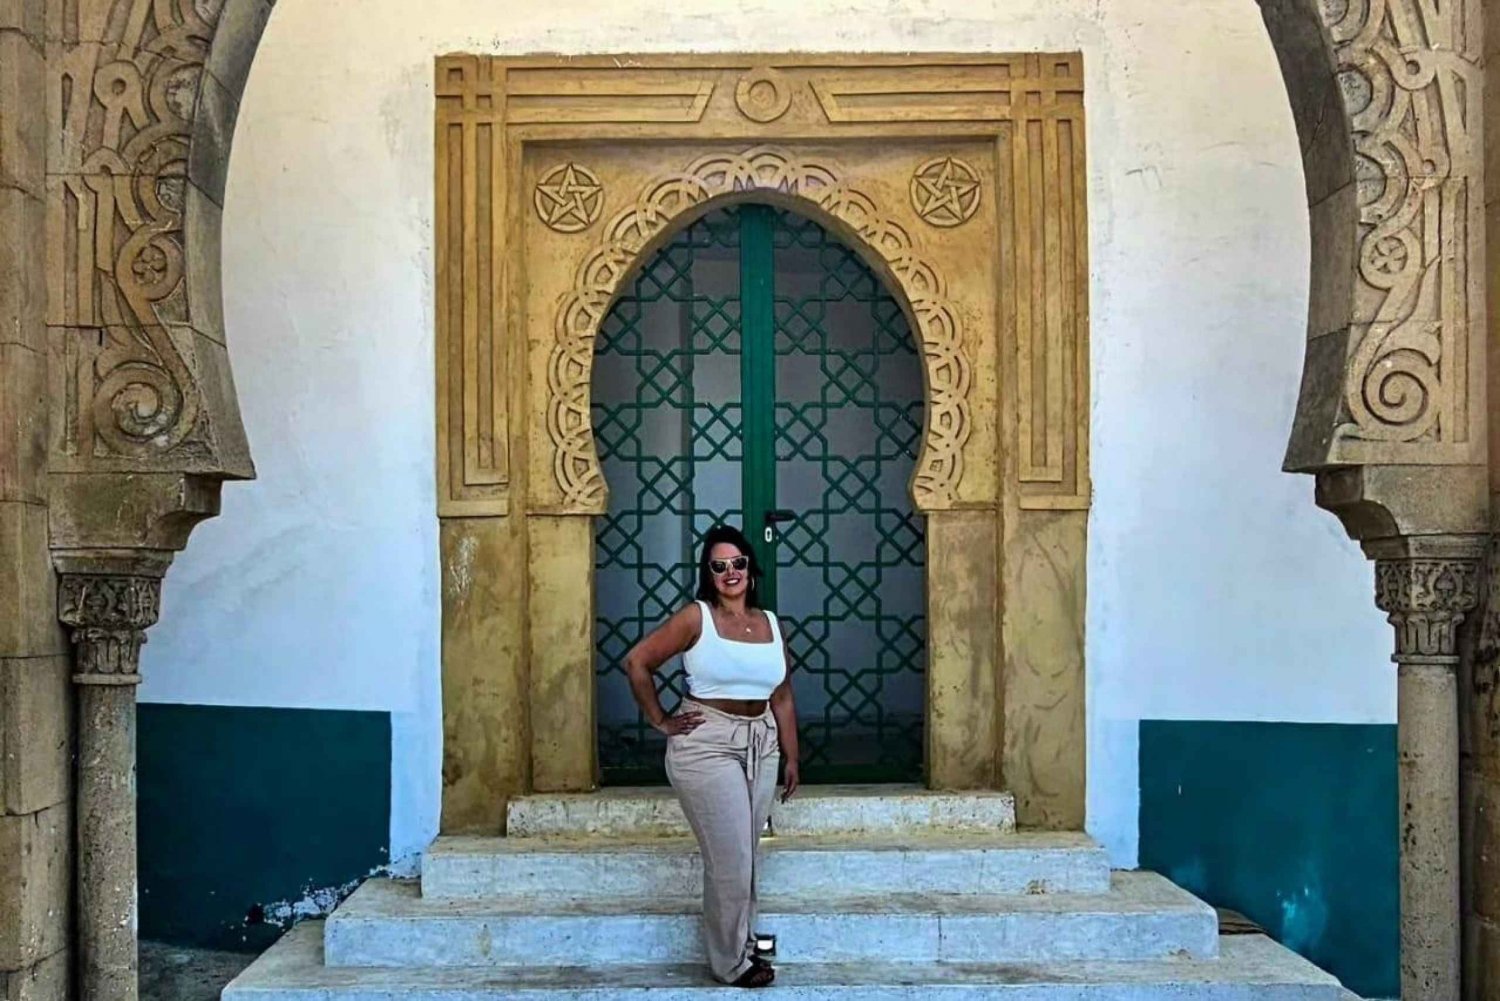 Malaga: Tetouan, UNESCO Site & Ceuta private tour to Morocco